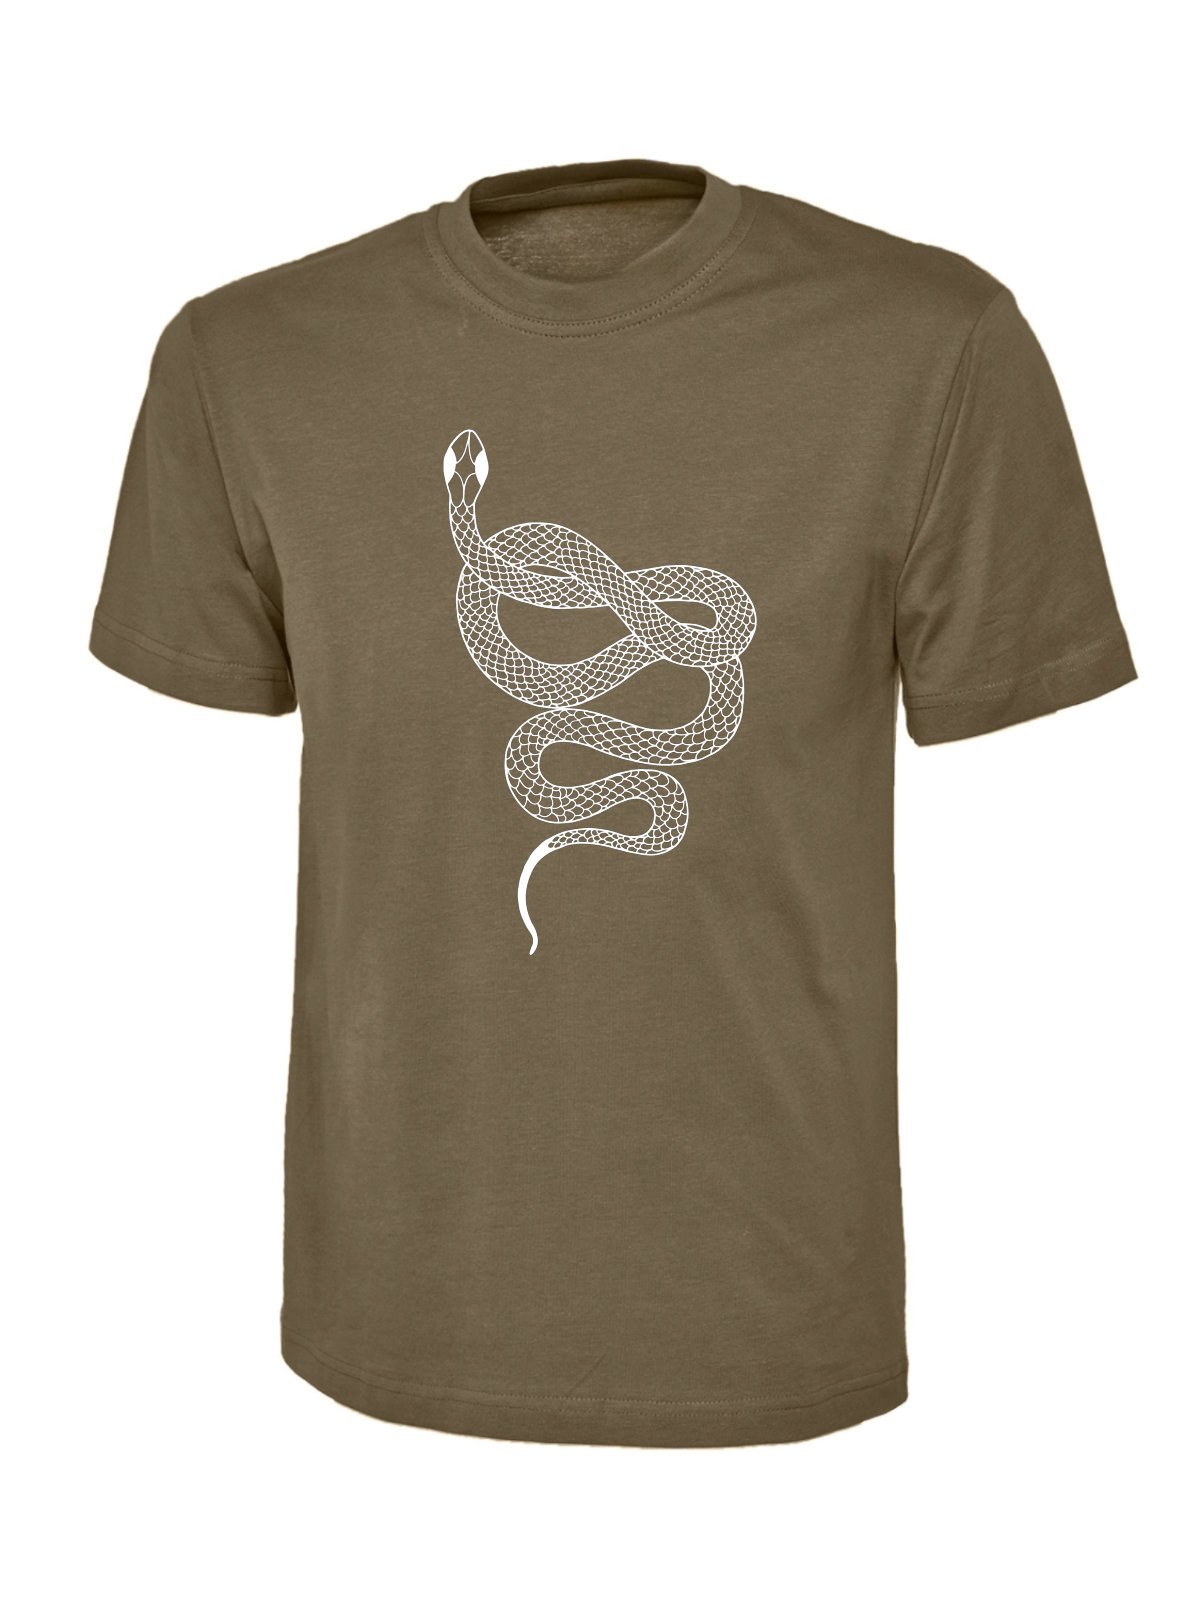 "Snake" Tee - Wow T-Shirts